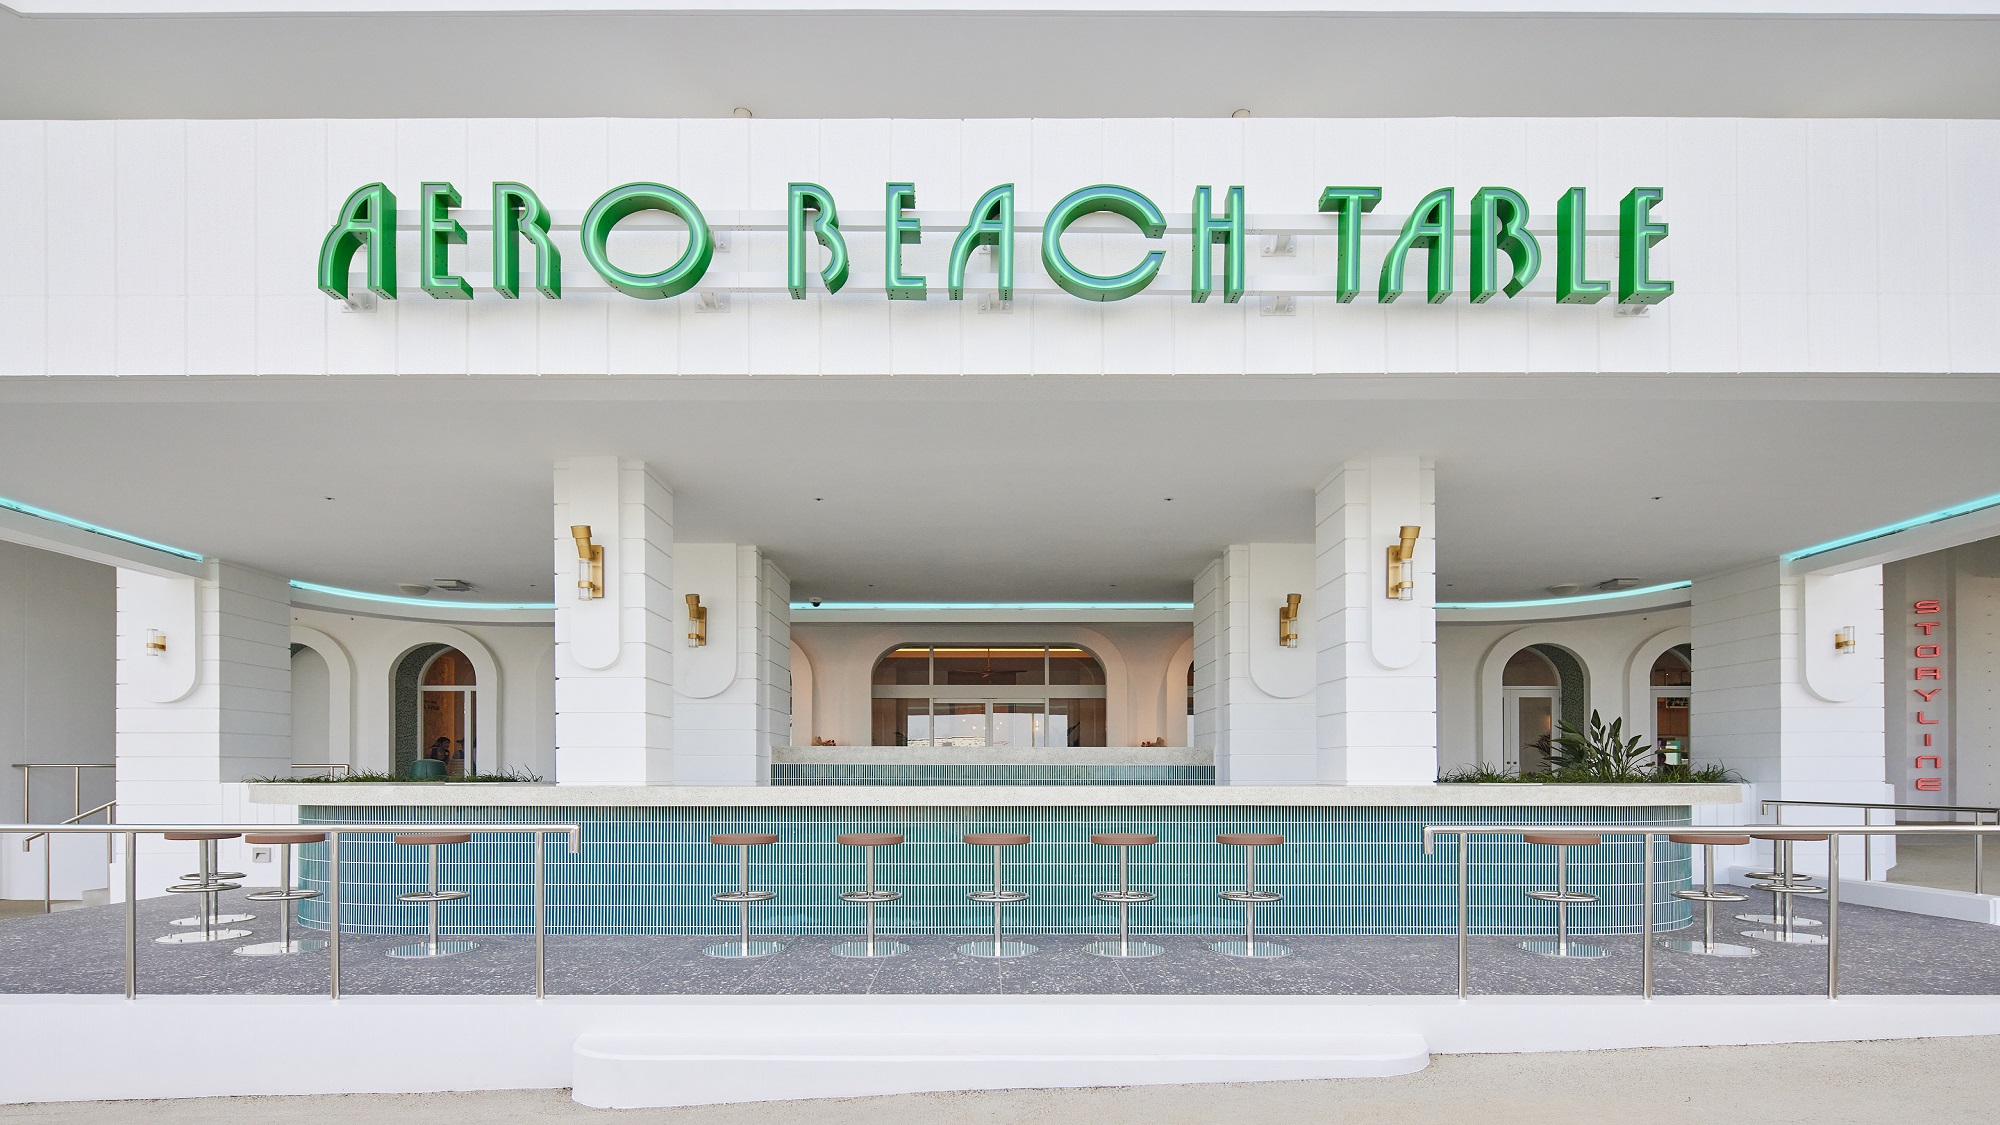 AERO BEACH TABLE（エアロビーチテーブル）